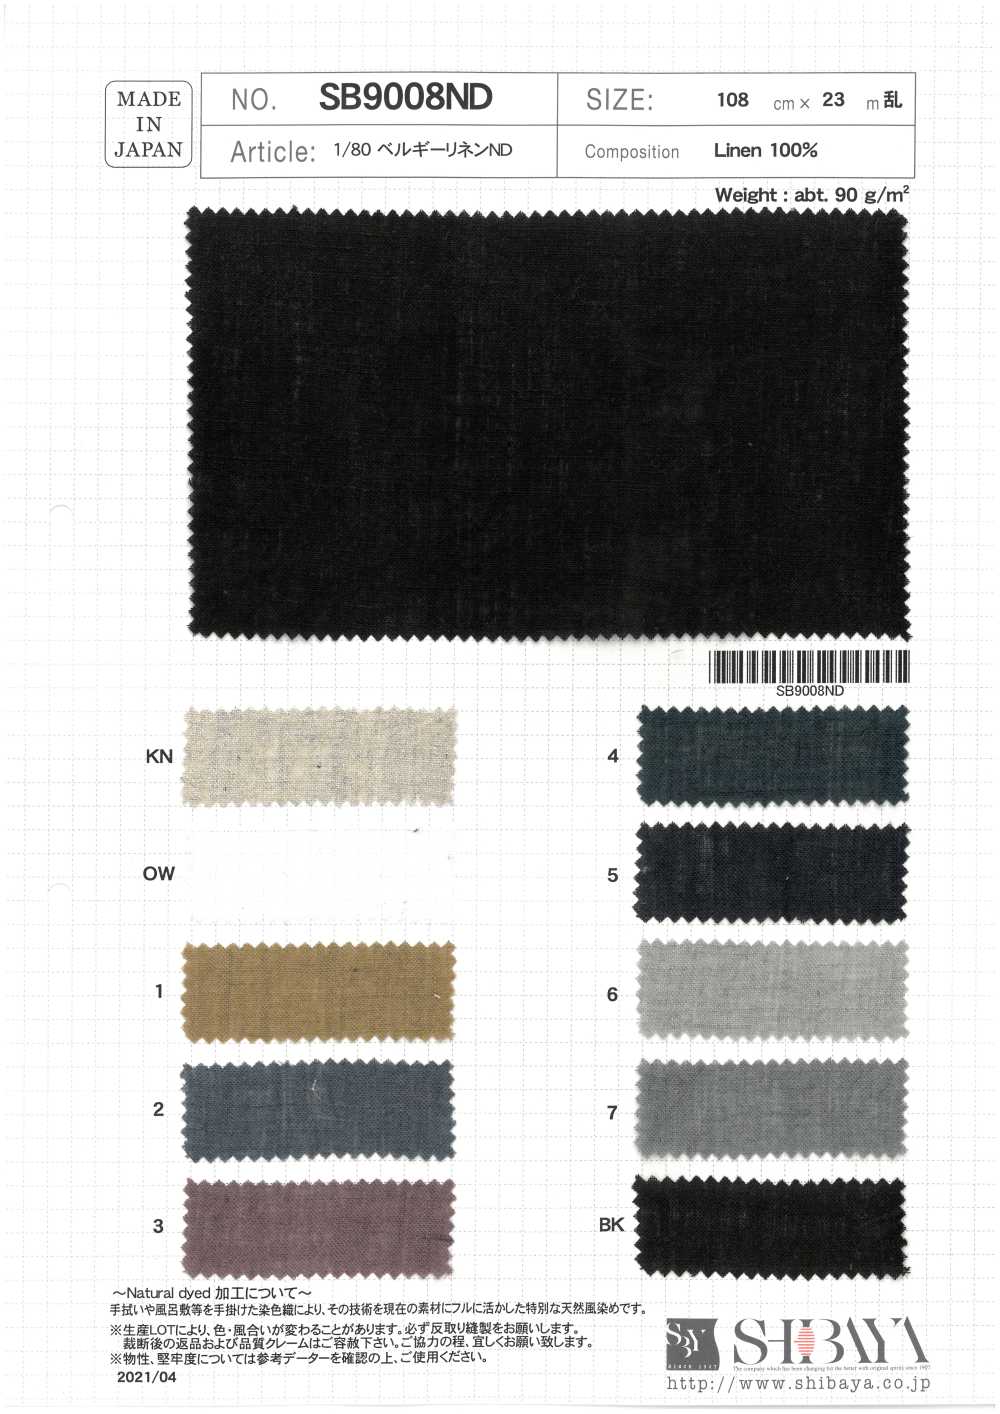 SB9008ND 1/80 Lin Belge ND[Fabrication De Textile] SHIBAYA